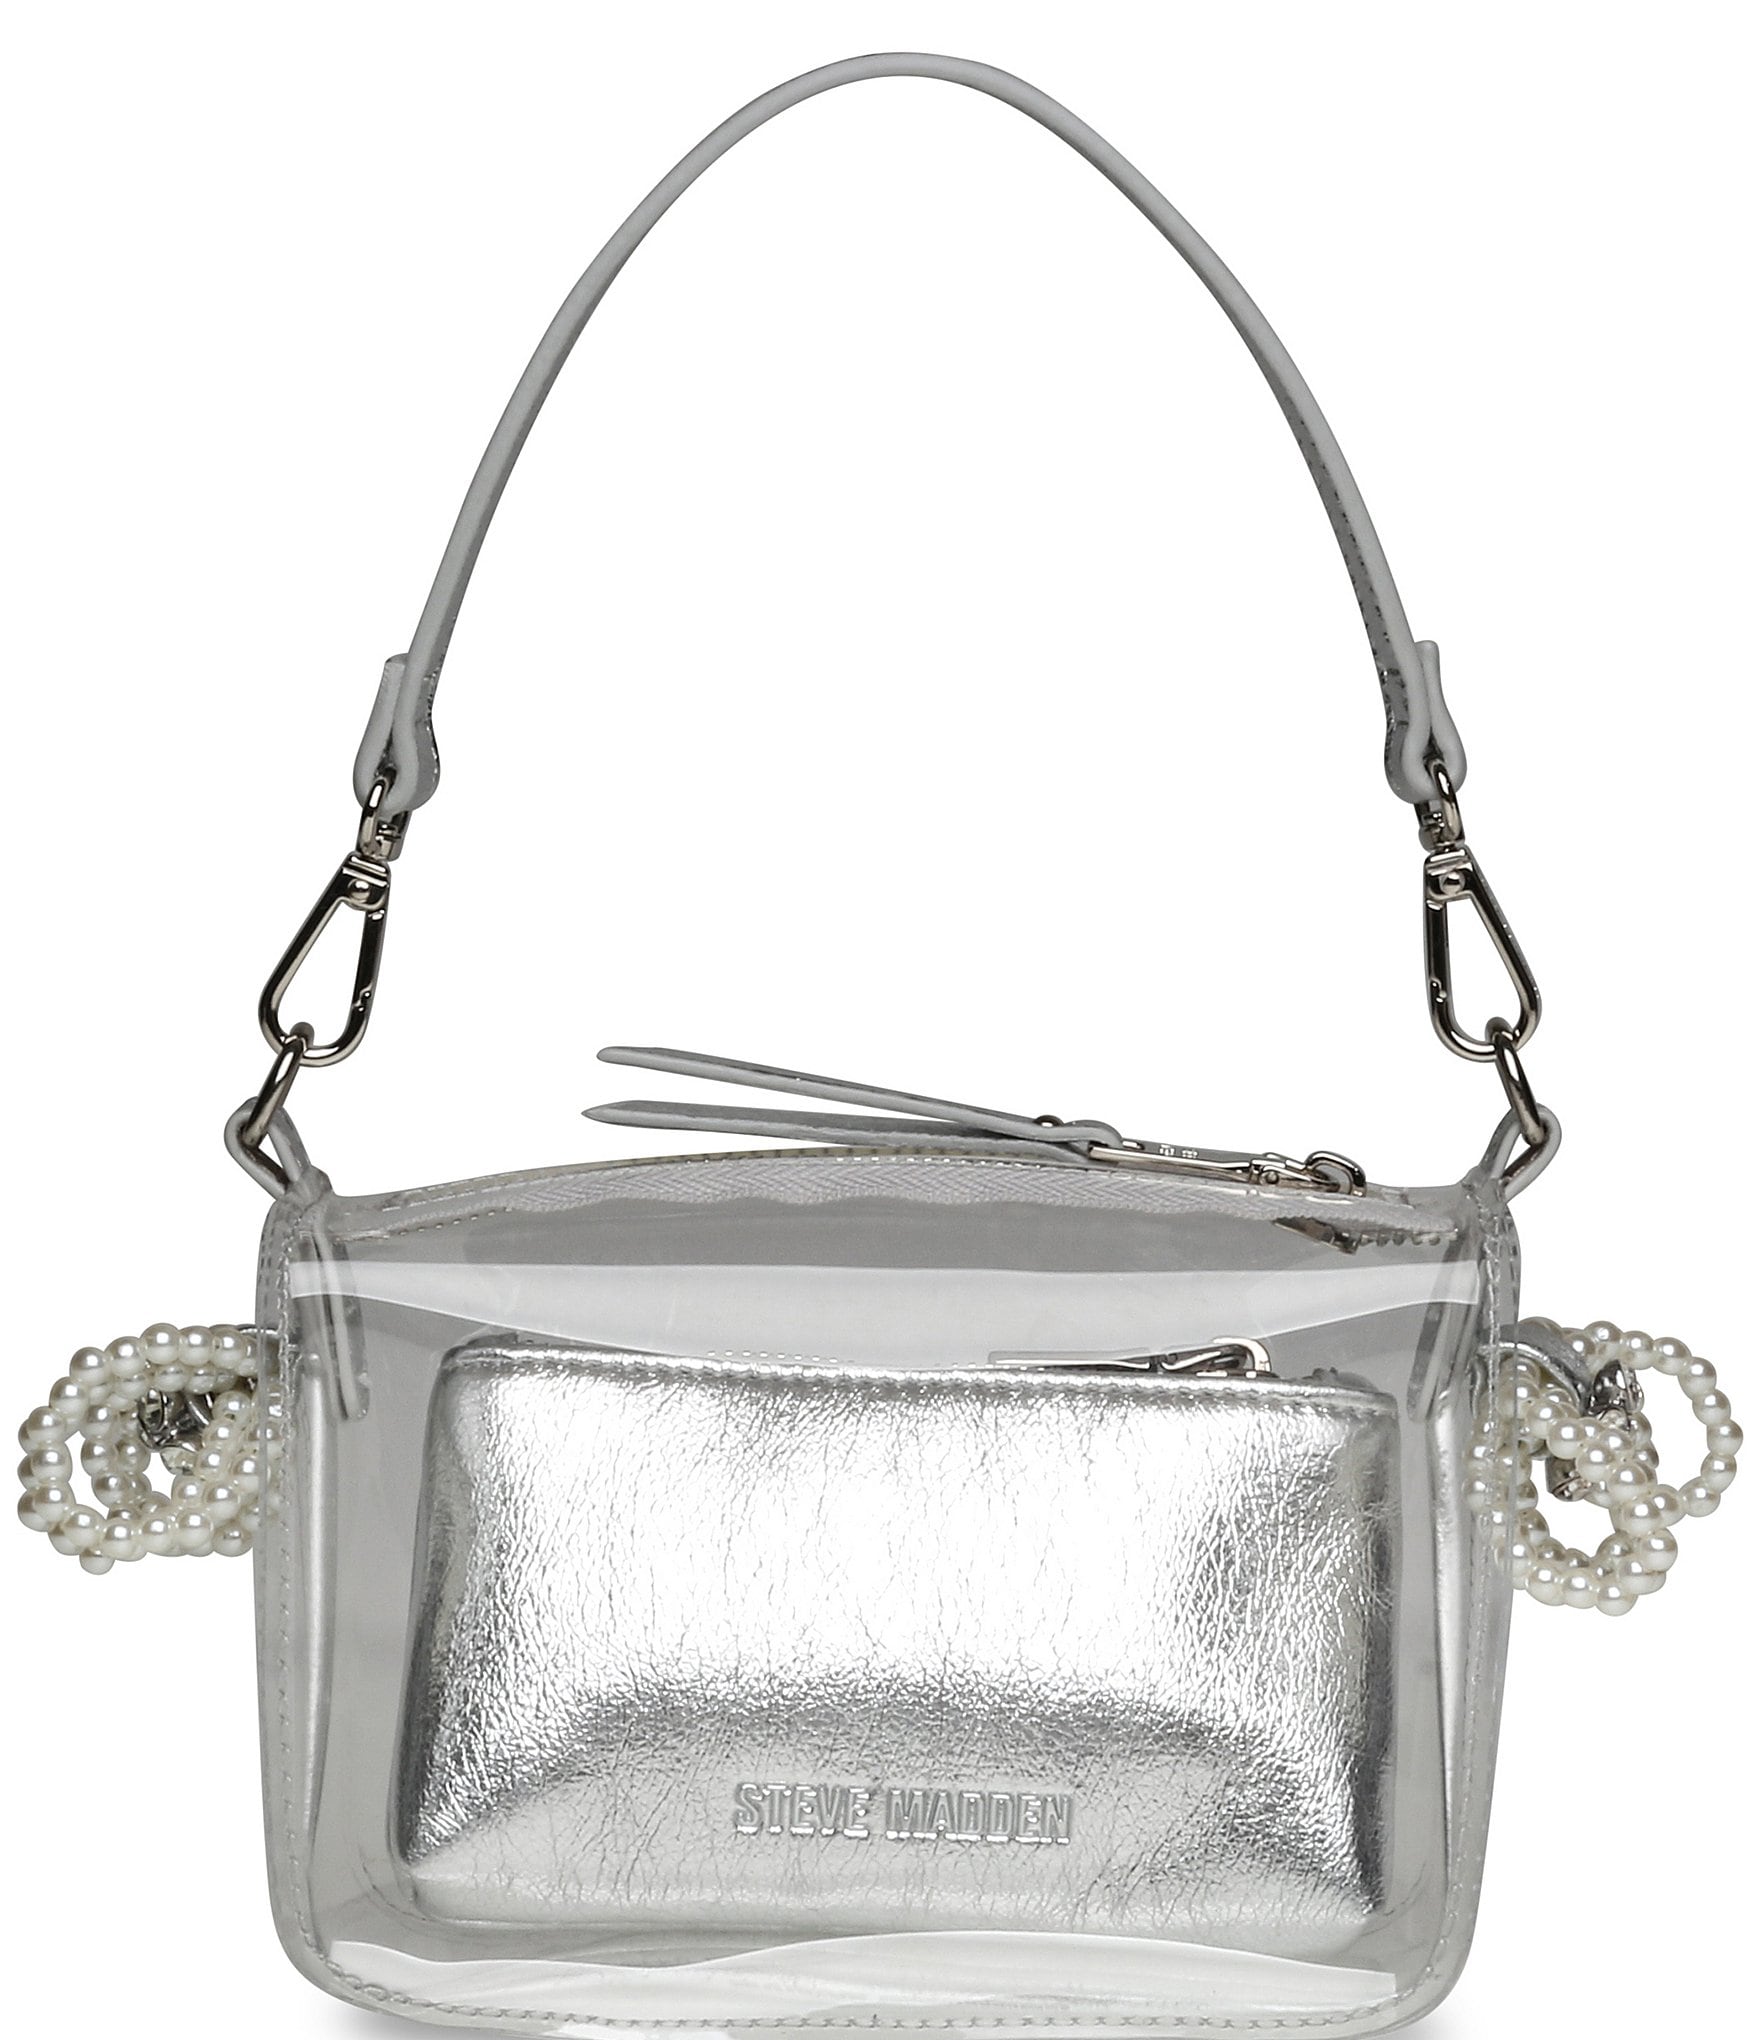 Sale & Clearance Snap Handbags, Purses & Wallets | Dillard's